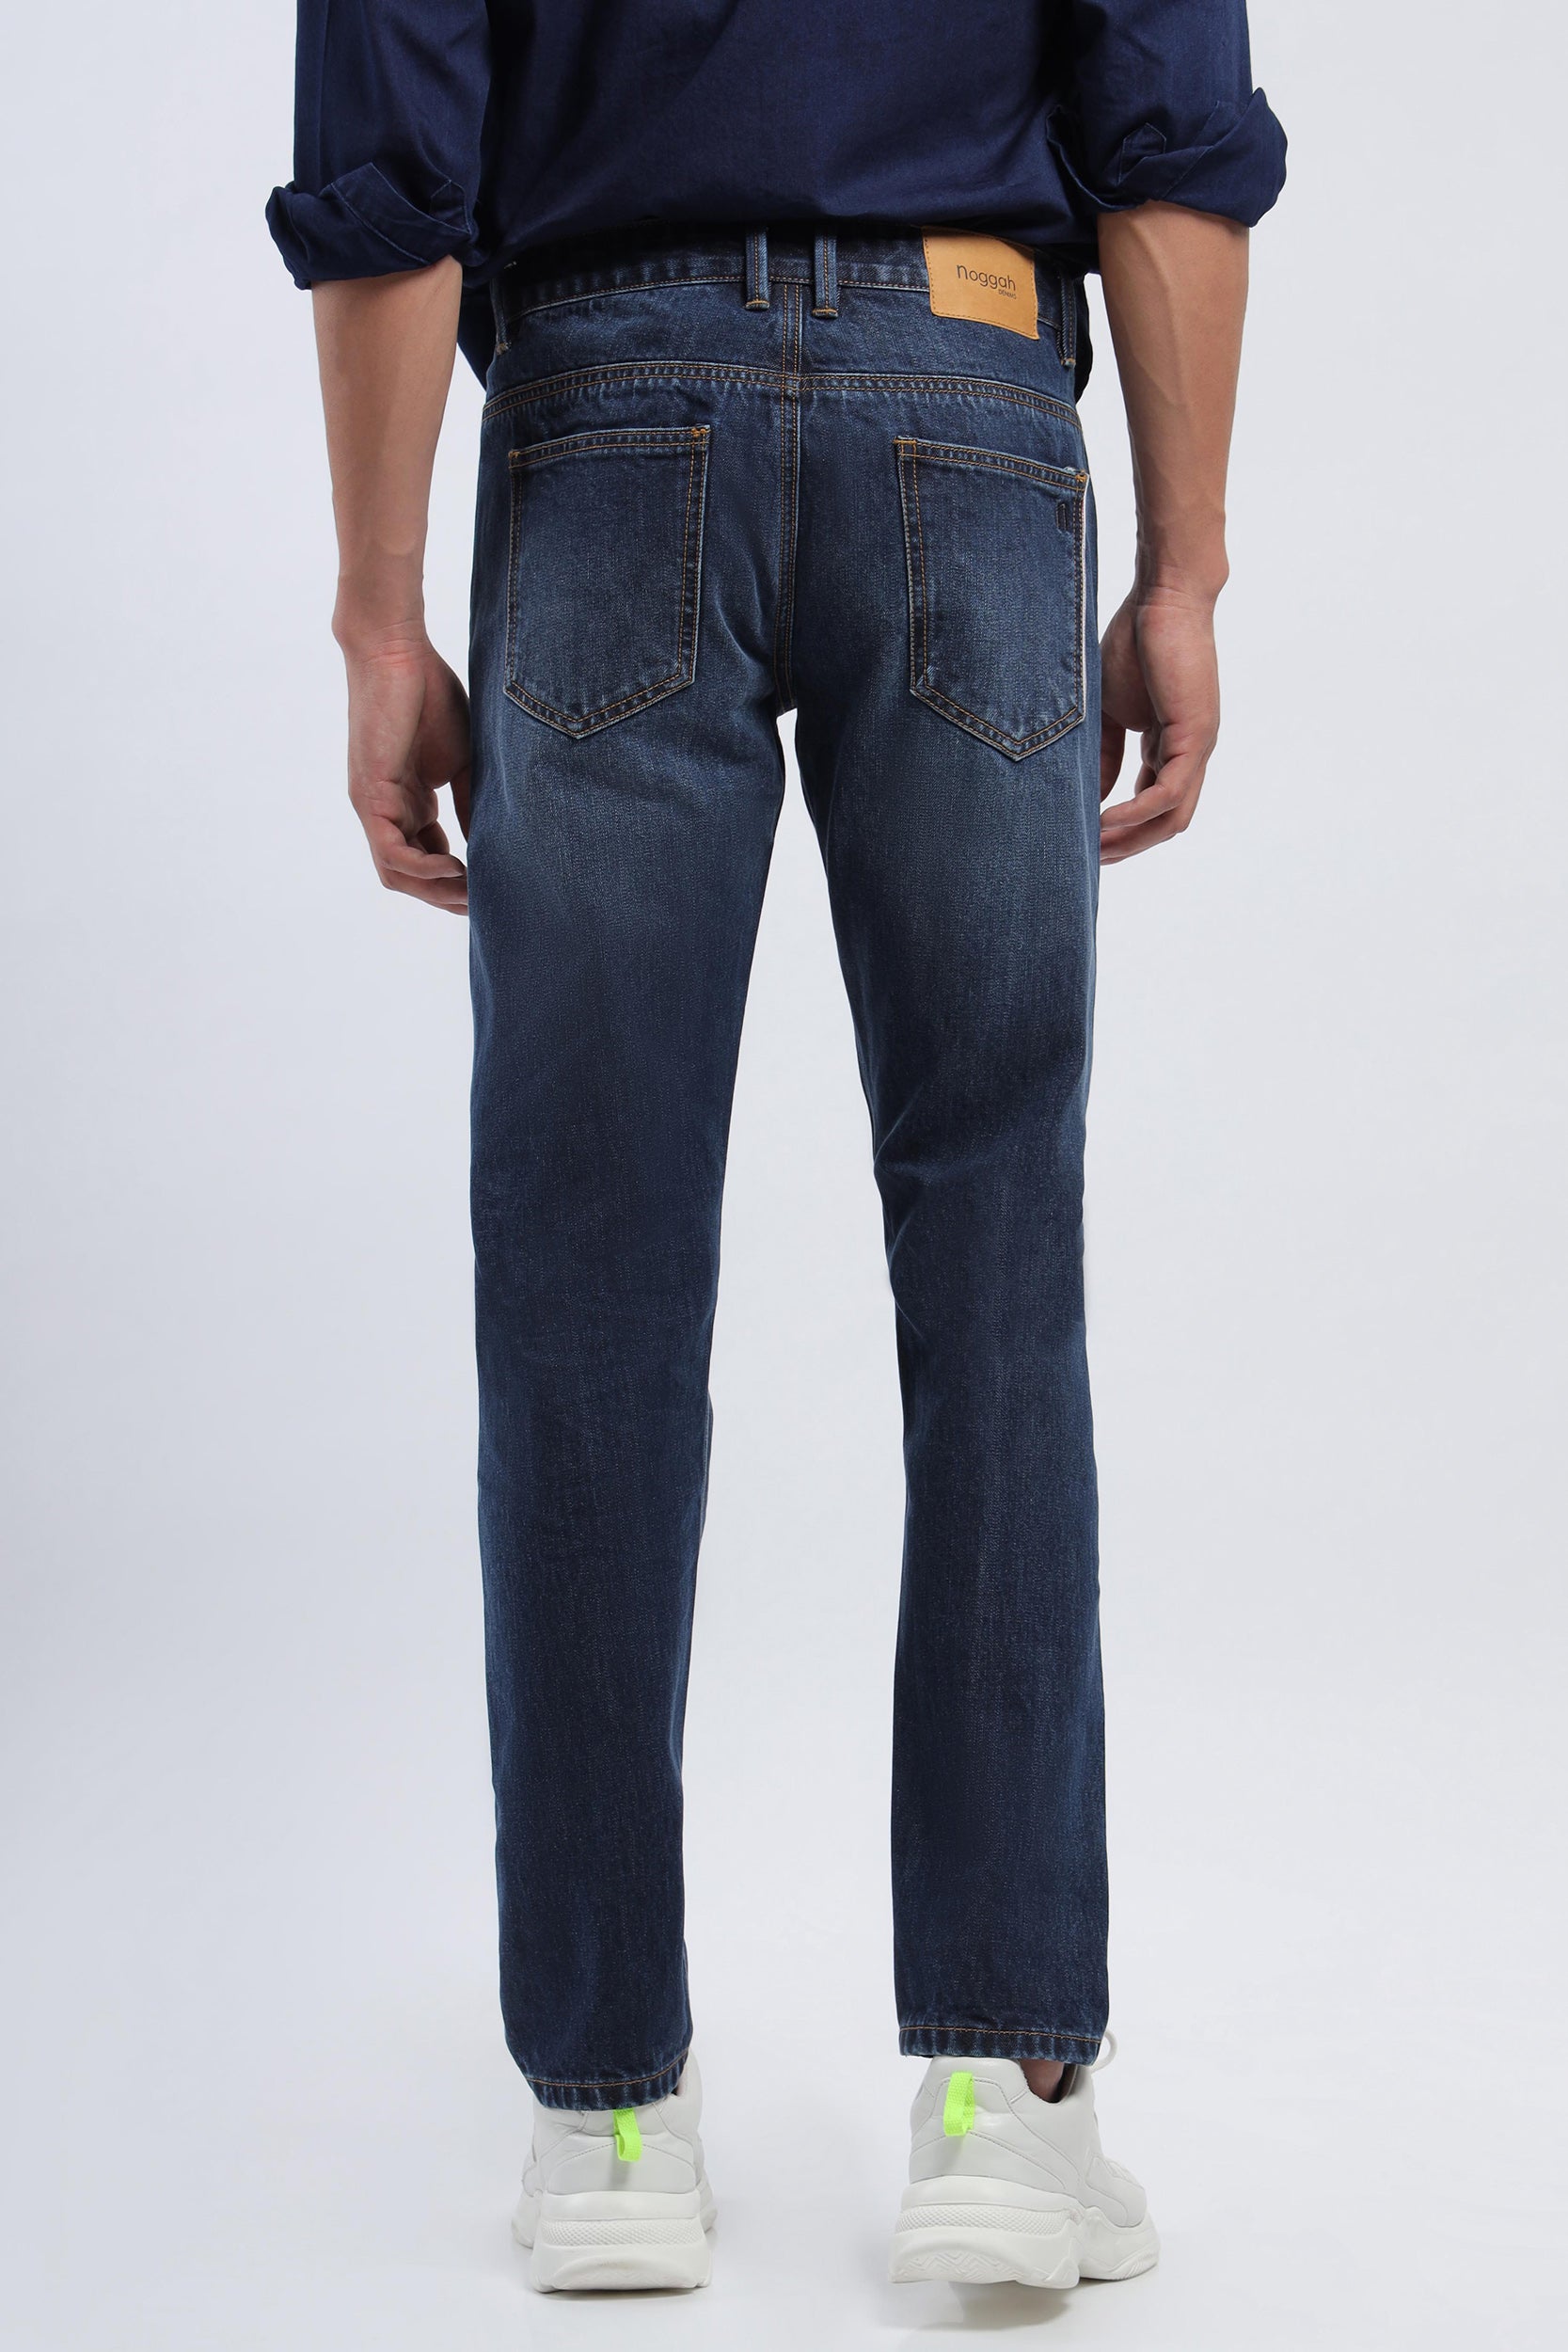 555 14oz Selvedge Denim Super Slim Cut Jeans - Indigo – Iron Shop Provisions